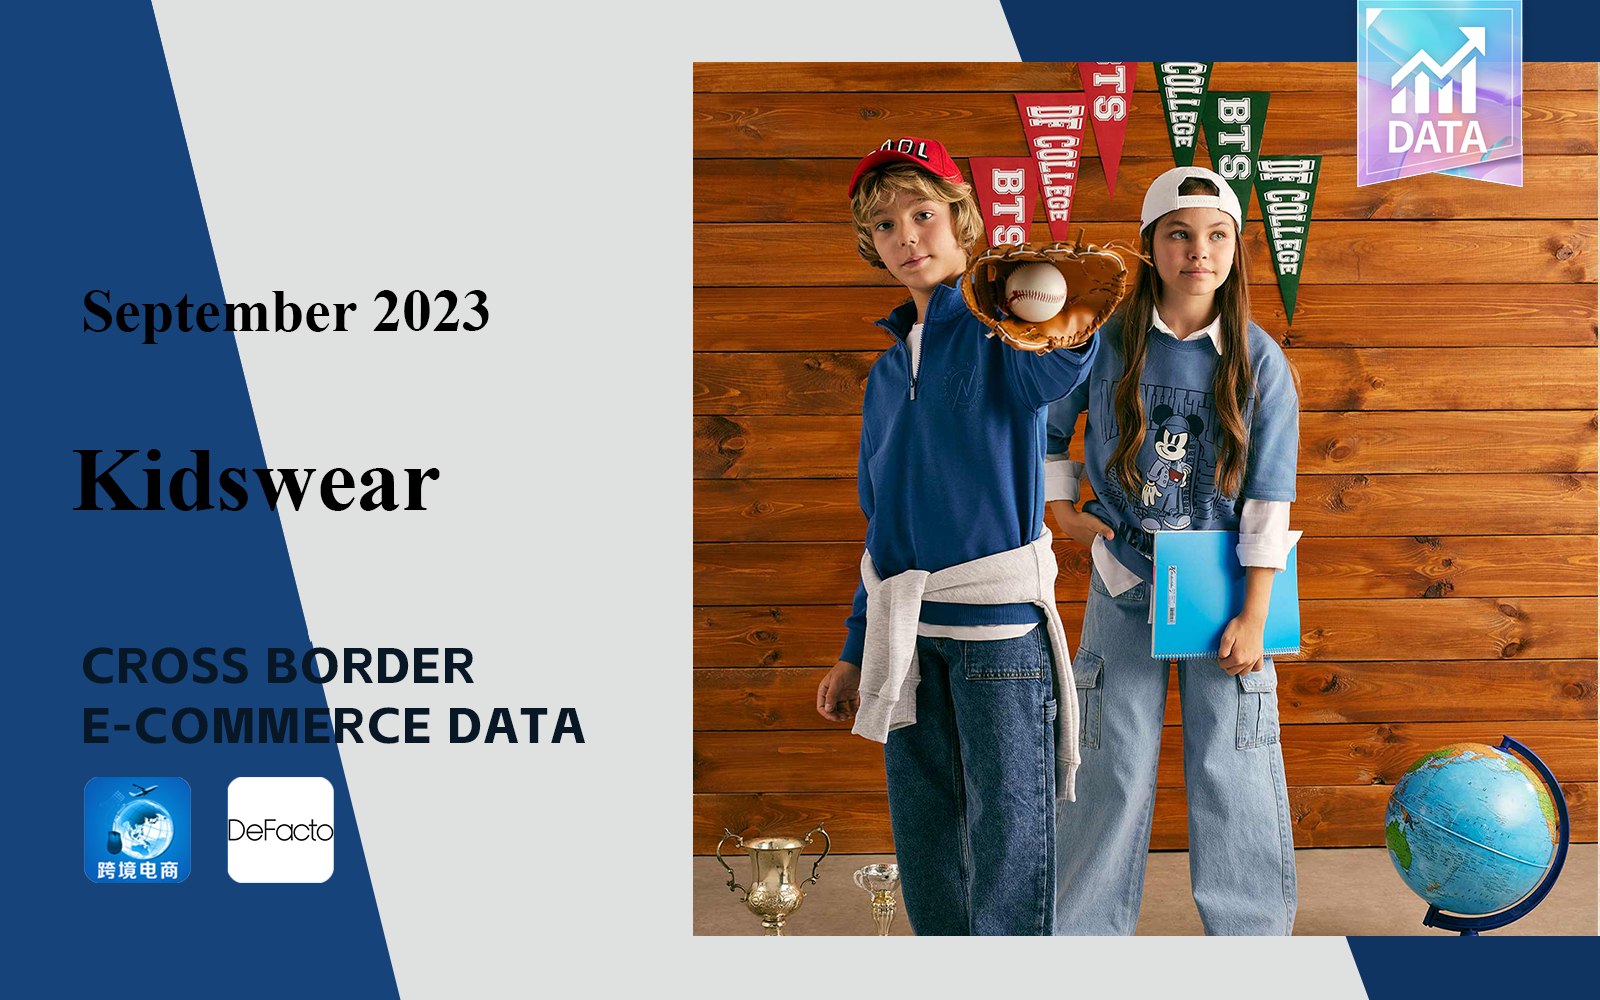 DeFacto -- The Data Analysis of Cross-border Kidswear E-commerce